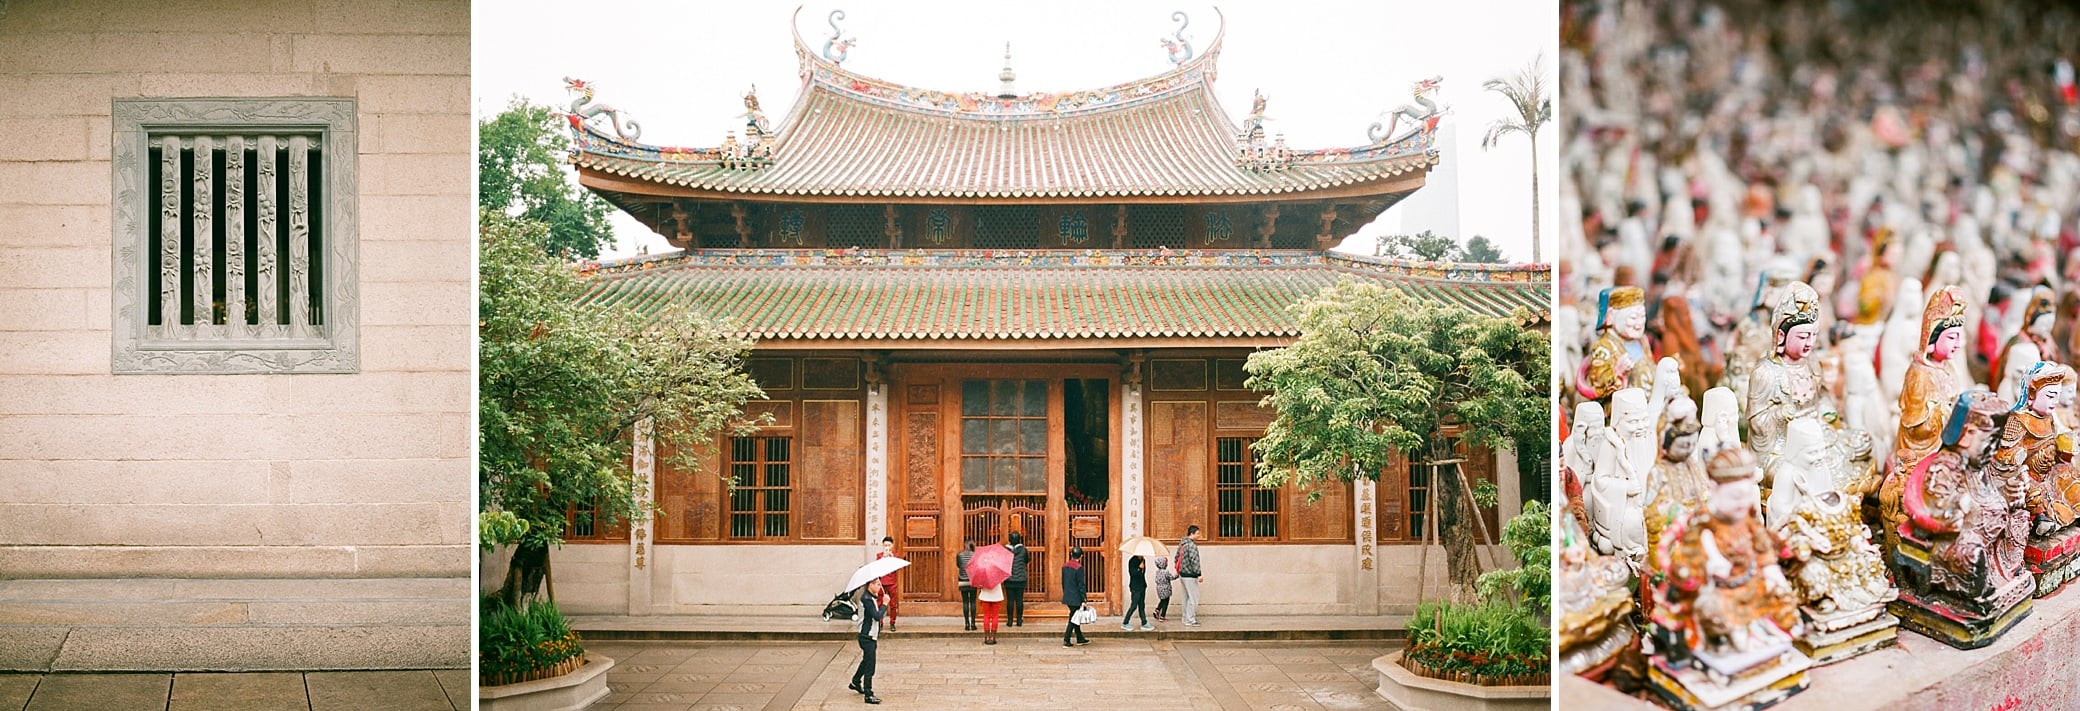 Destination Travel Photography | simply-splendid.com | Marla Cyree Xiamen China Kodak Ektar Film Asia Nanputo Temple